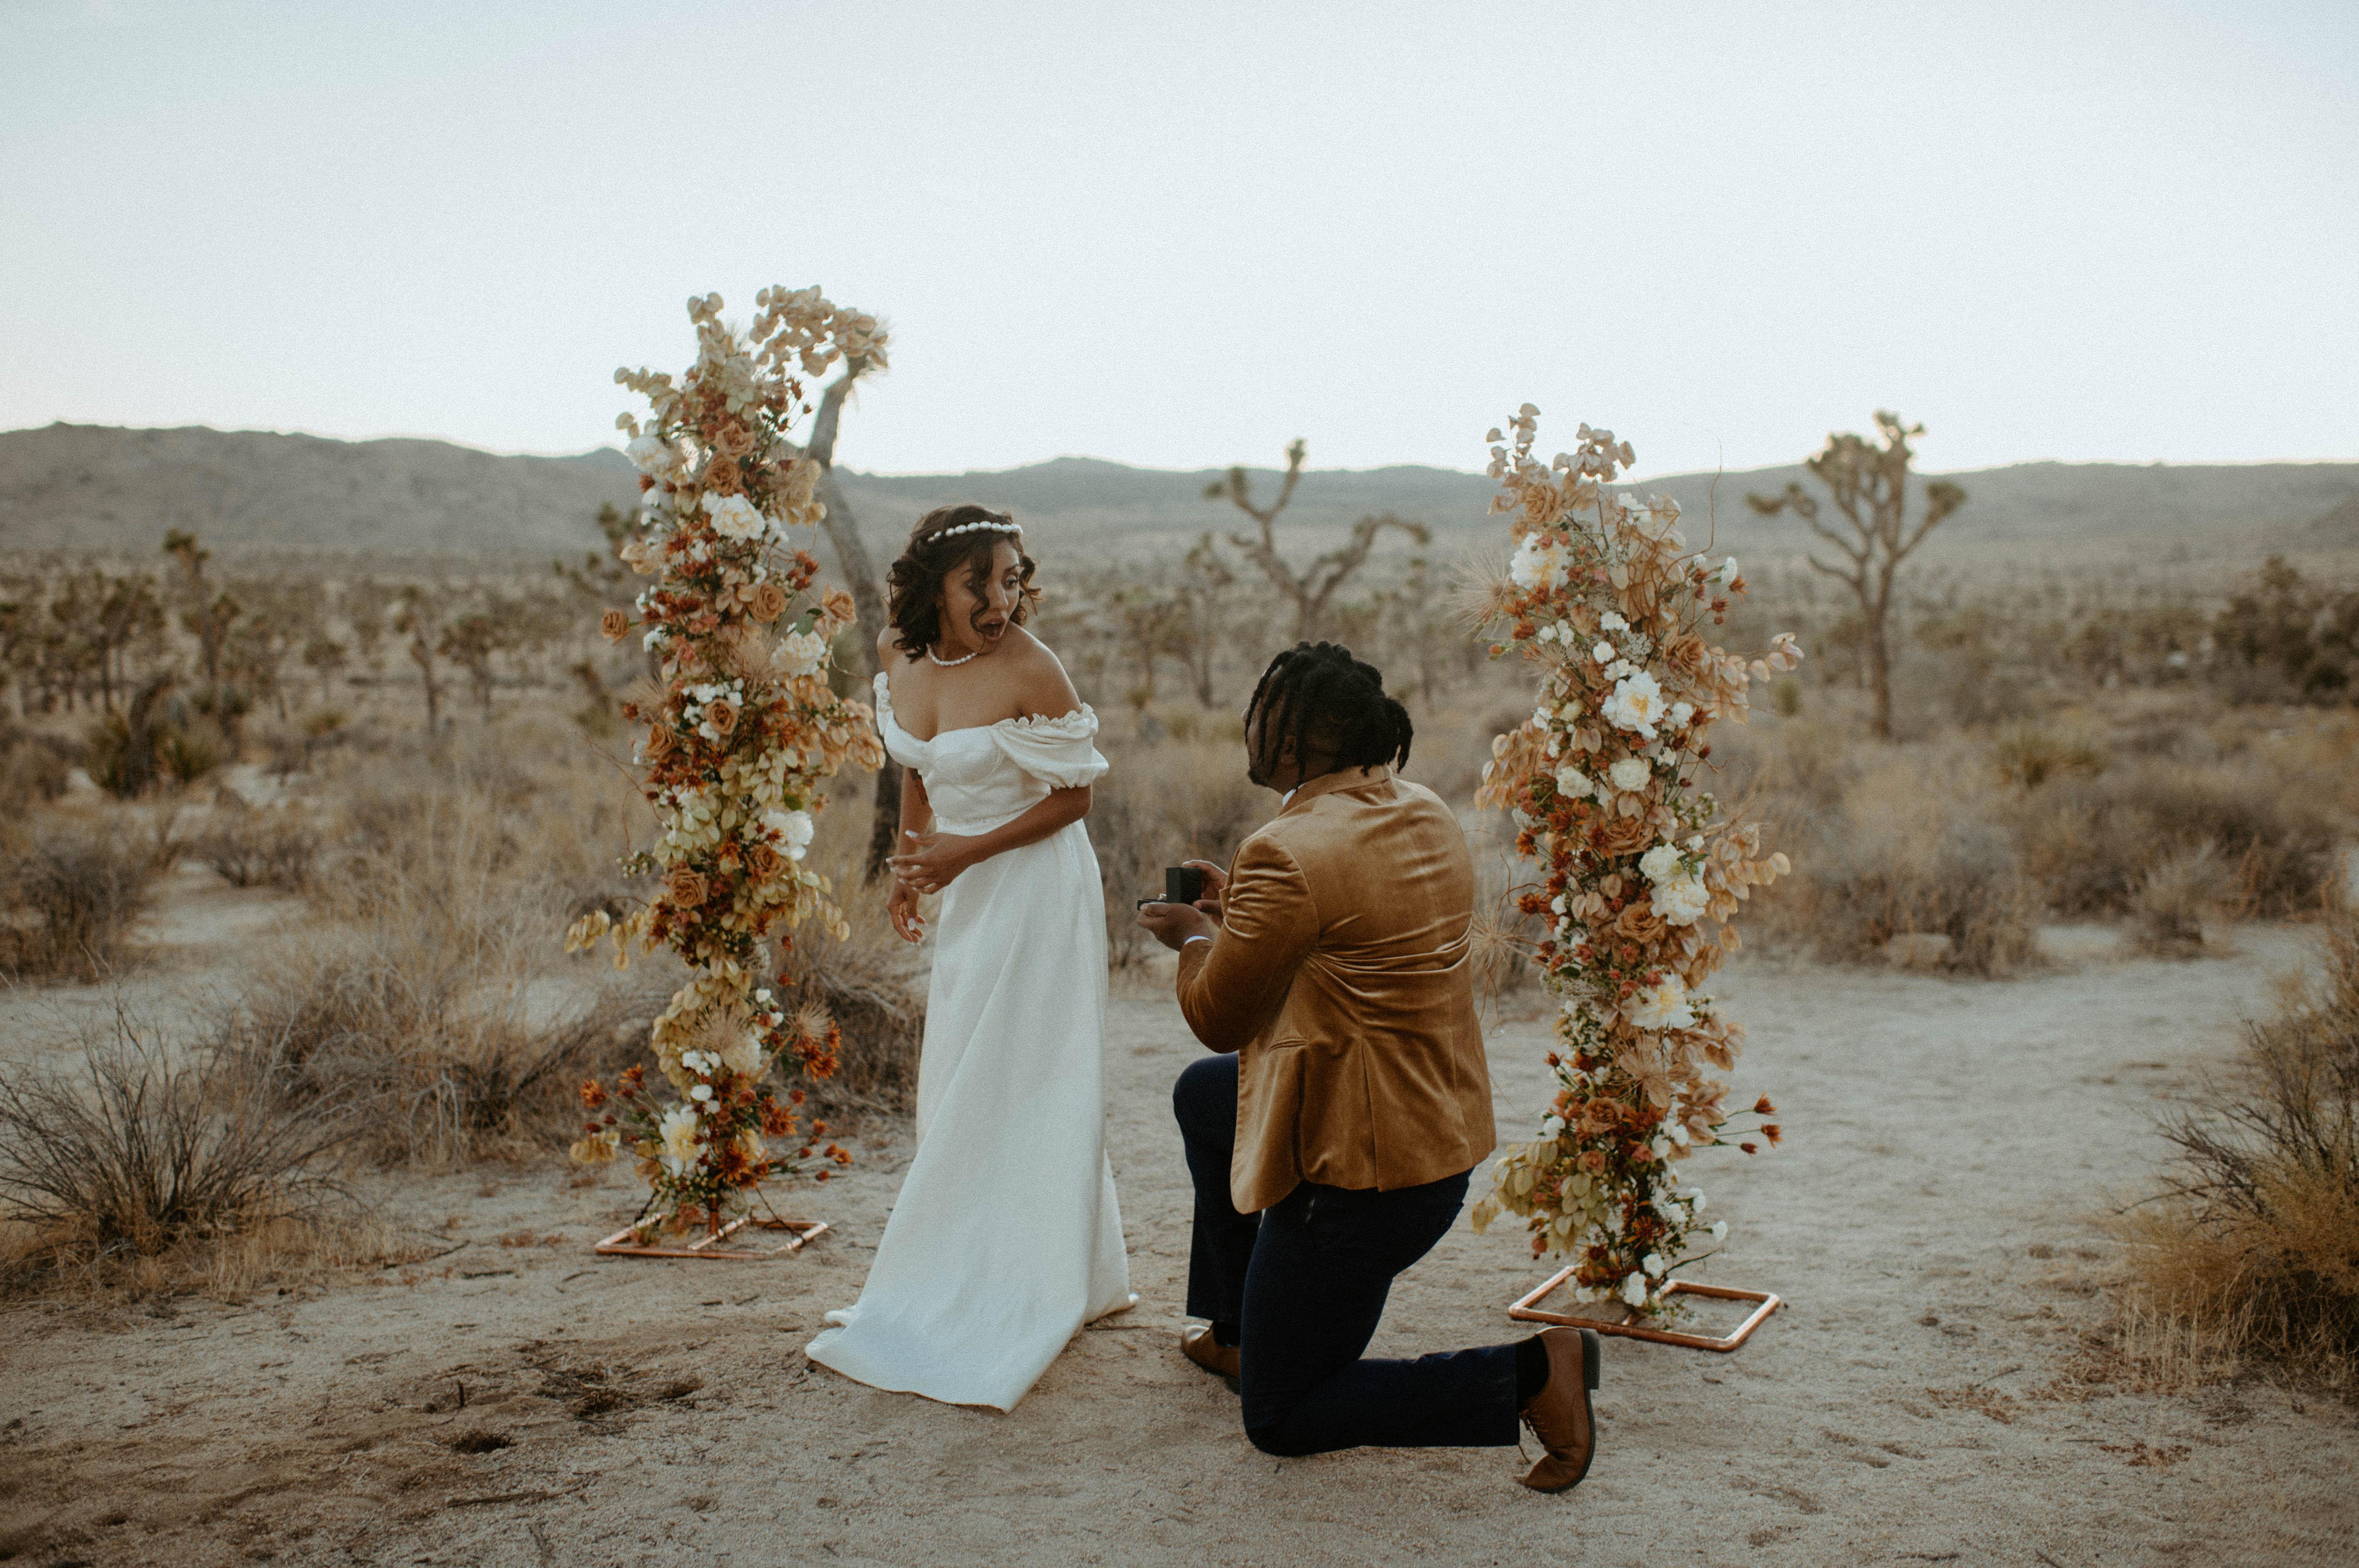 The Wedding Website of Mariah Mendoza and Benjamin Brooks